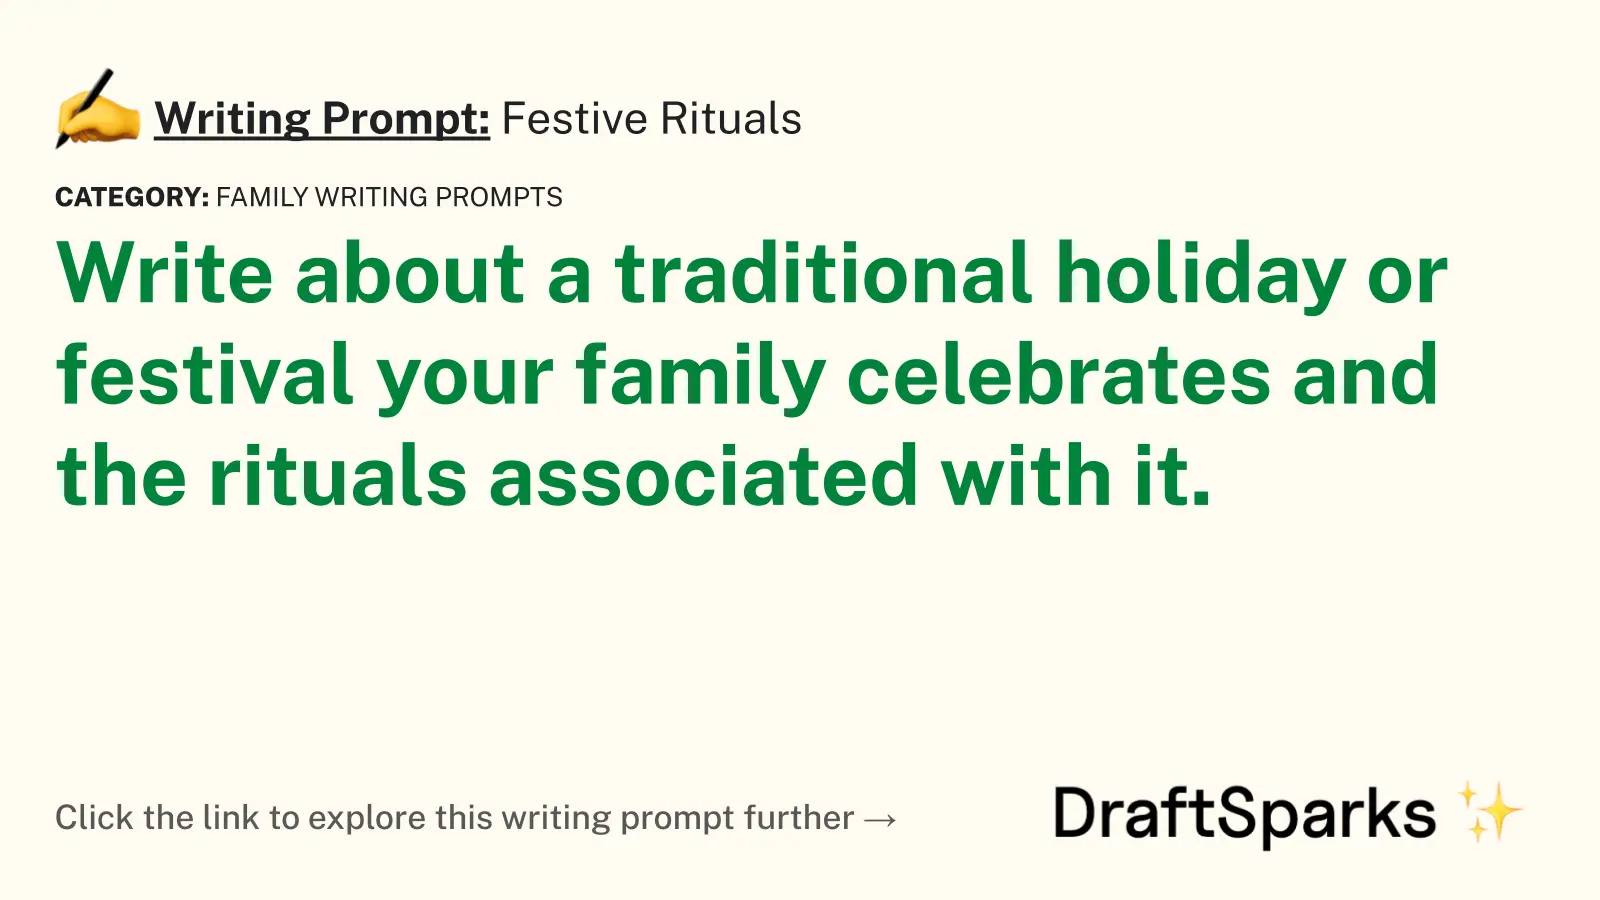 Festive Rituals